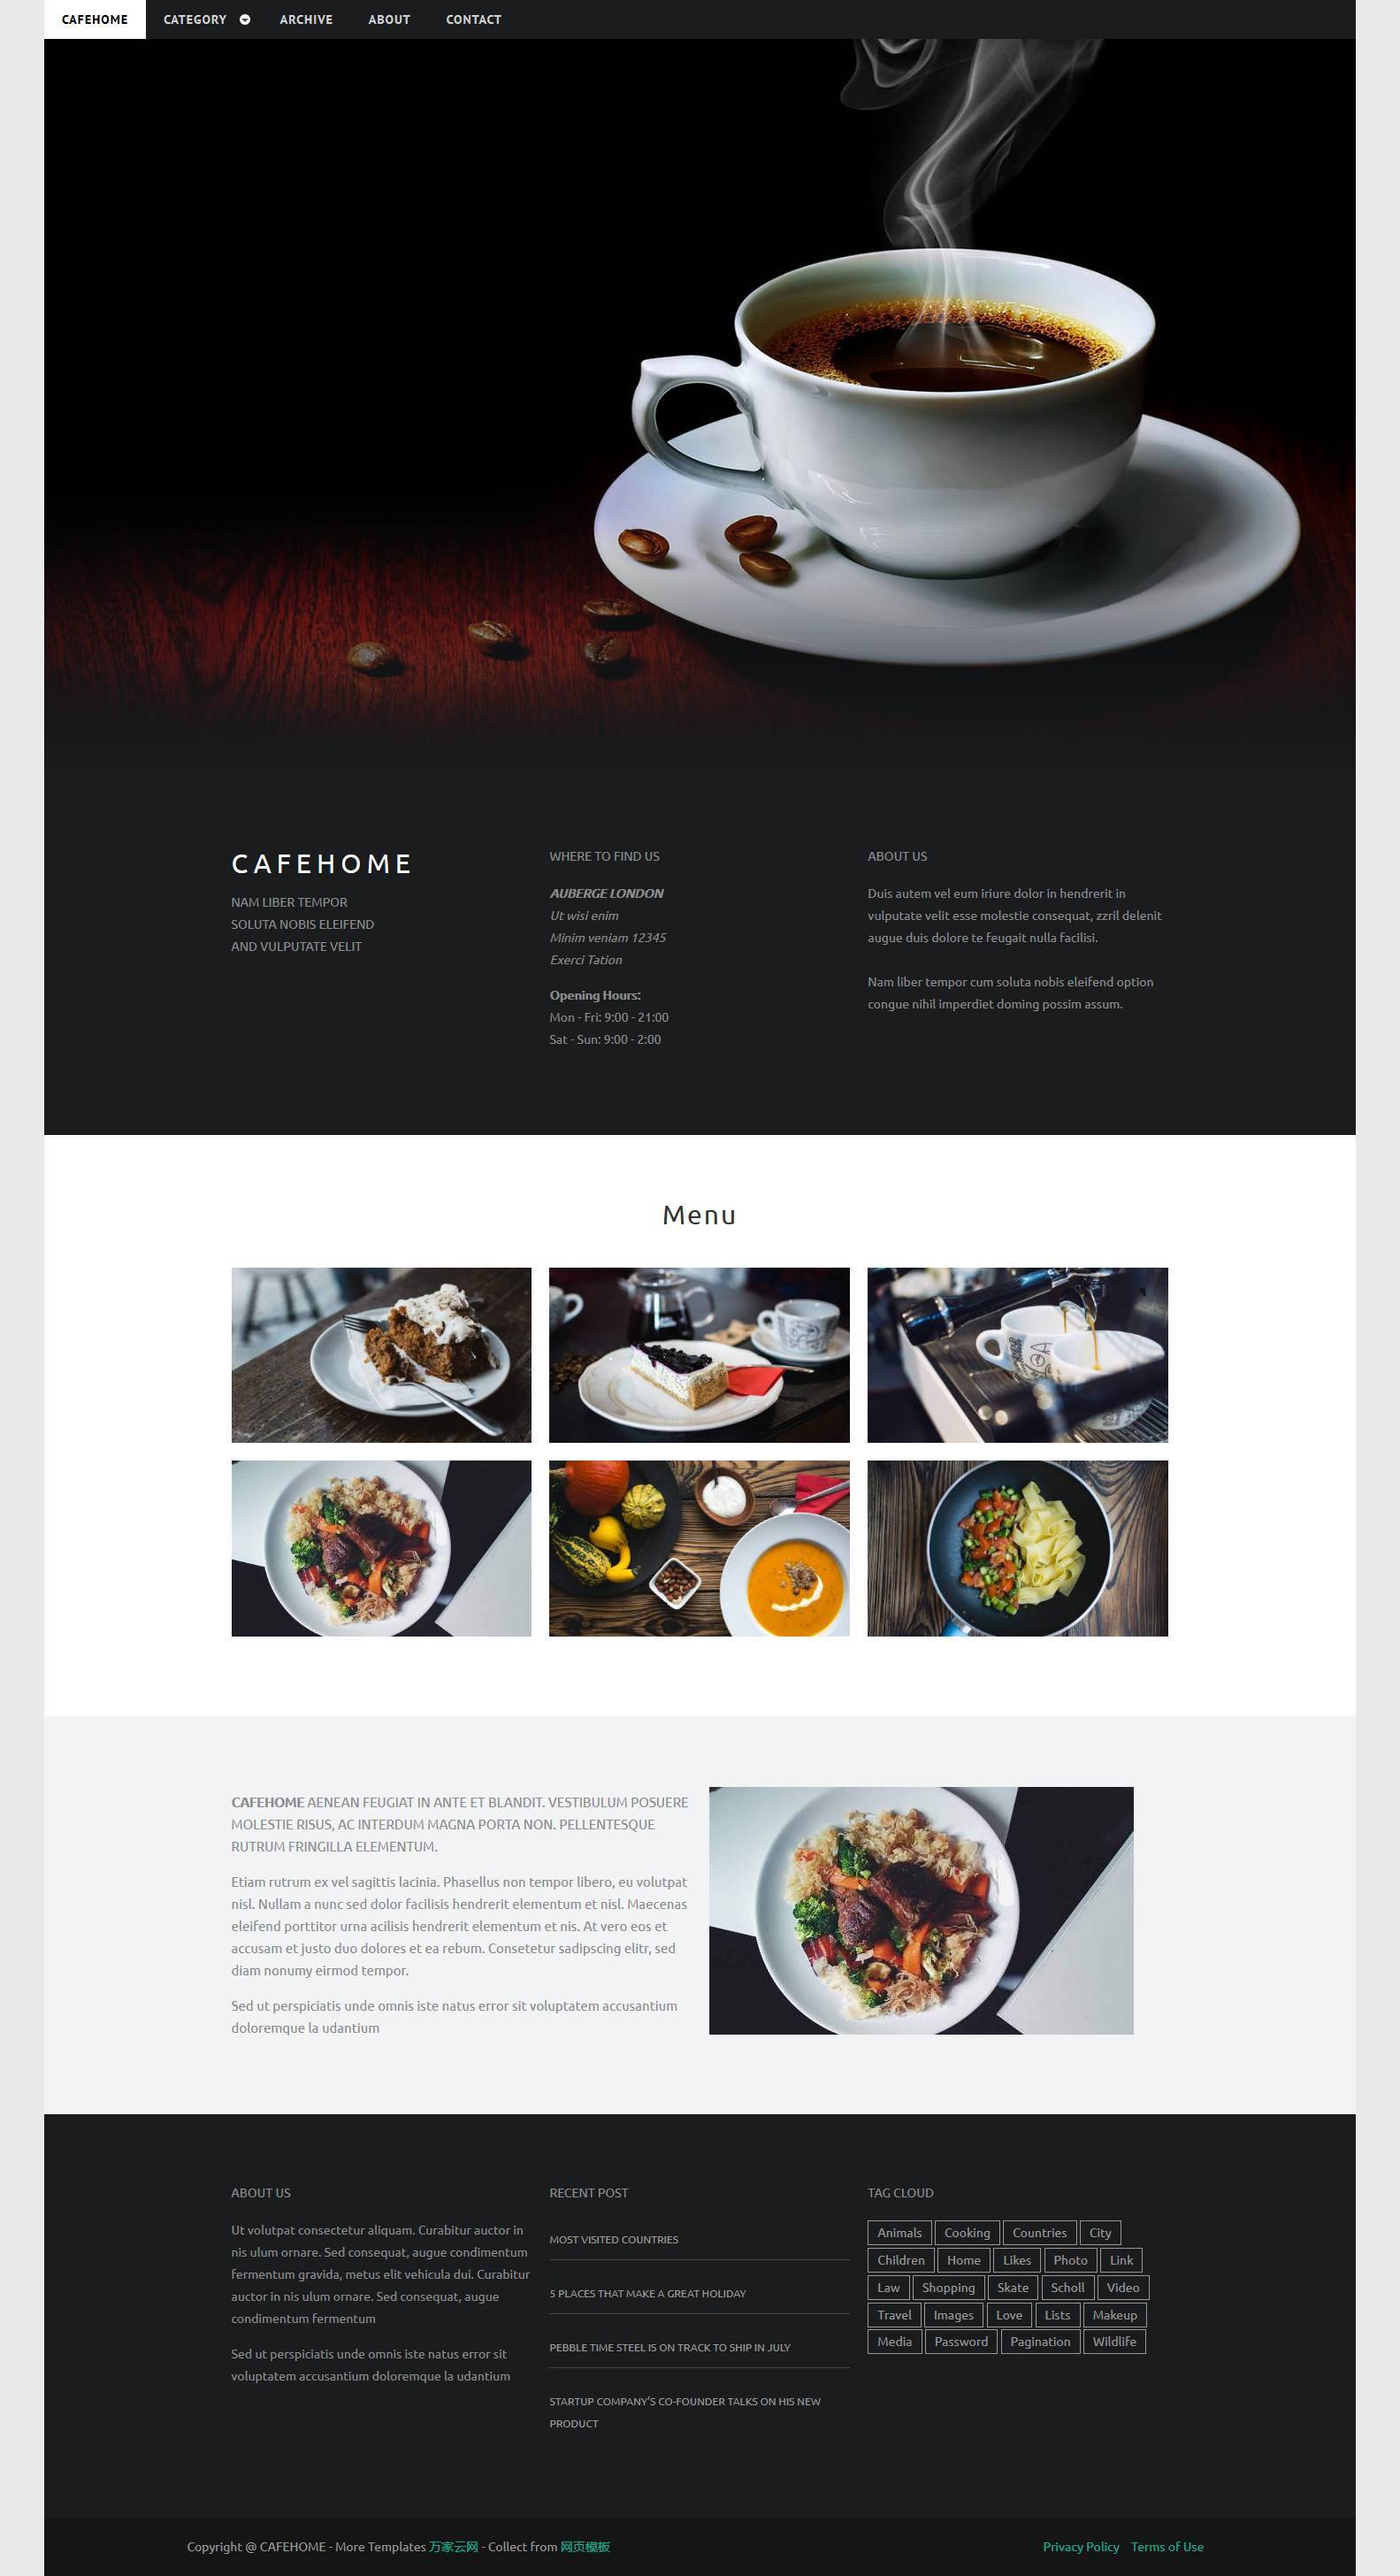 Cafe下午茶休闲食品企业网站模板